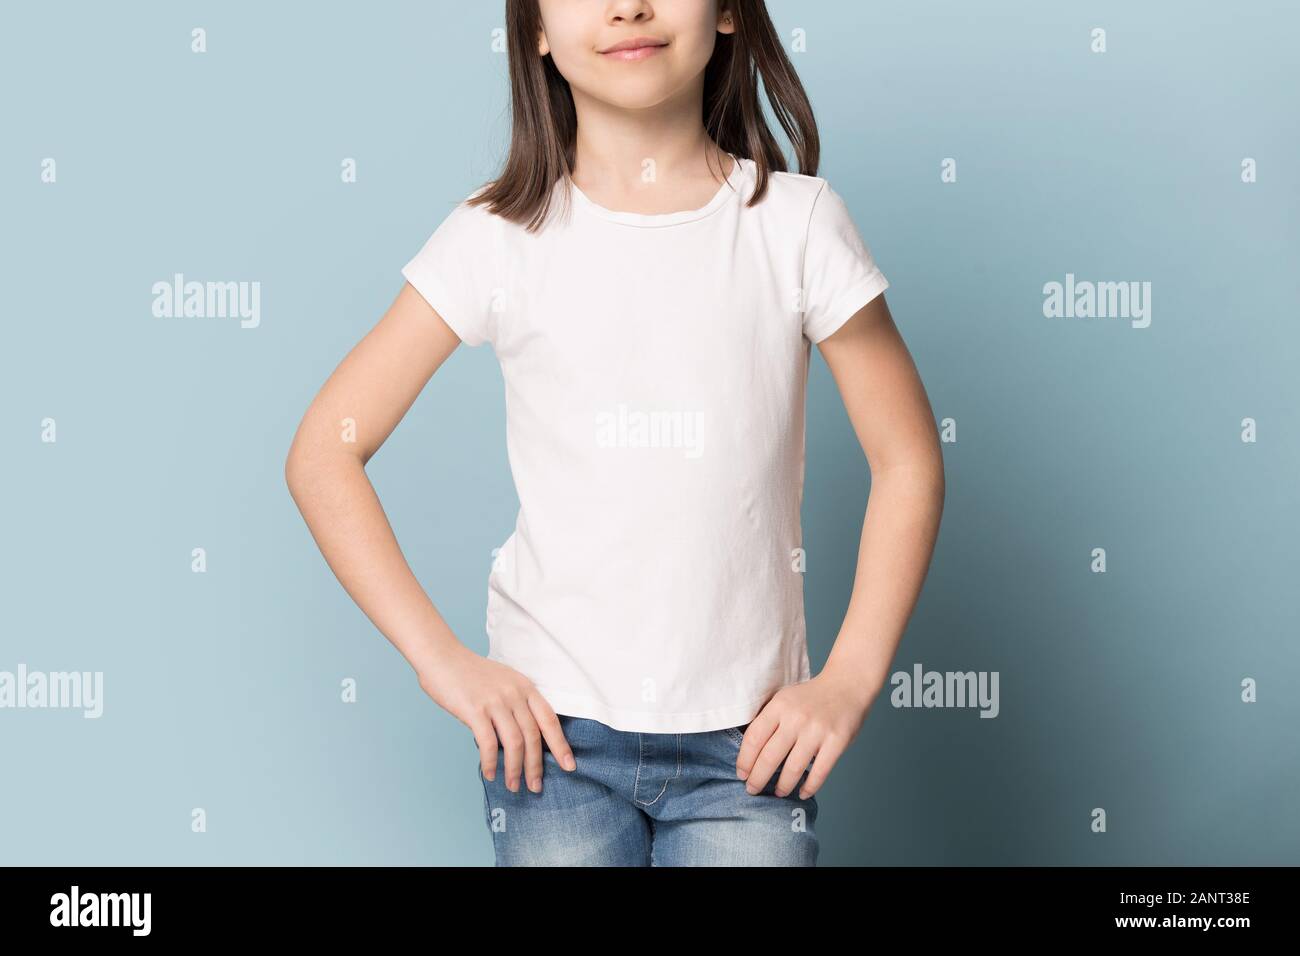 Preschool girl demonstrating white blank mock up copy space t-shirt. Stock Photo